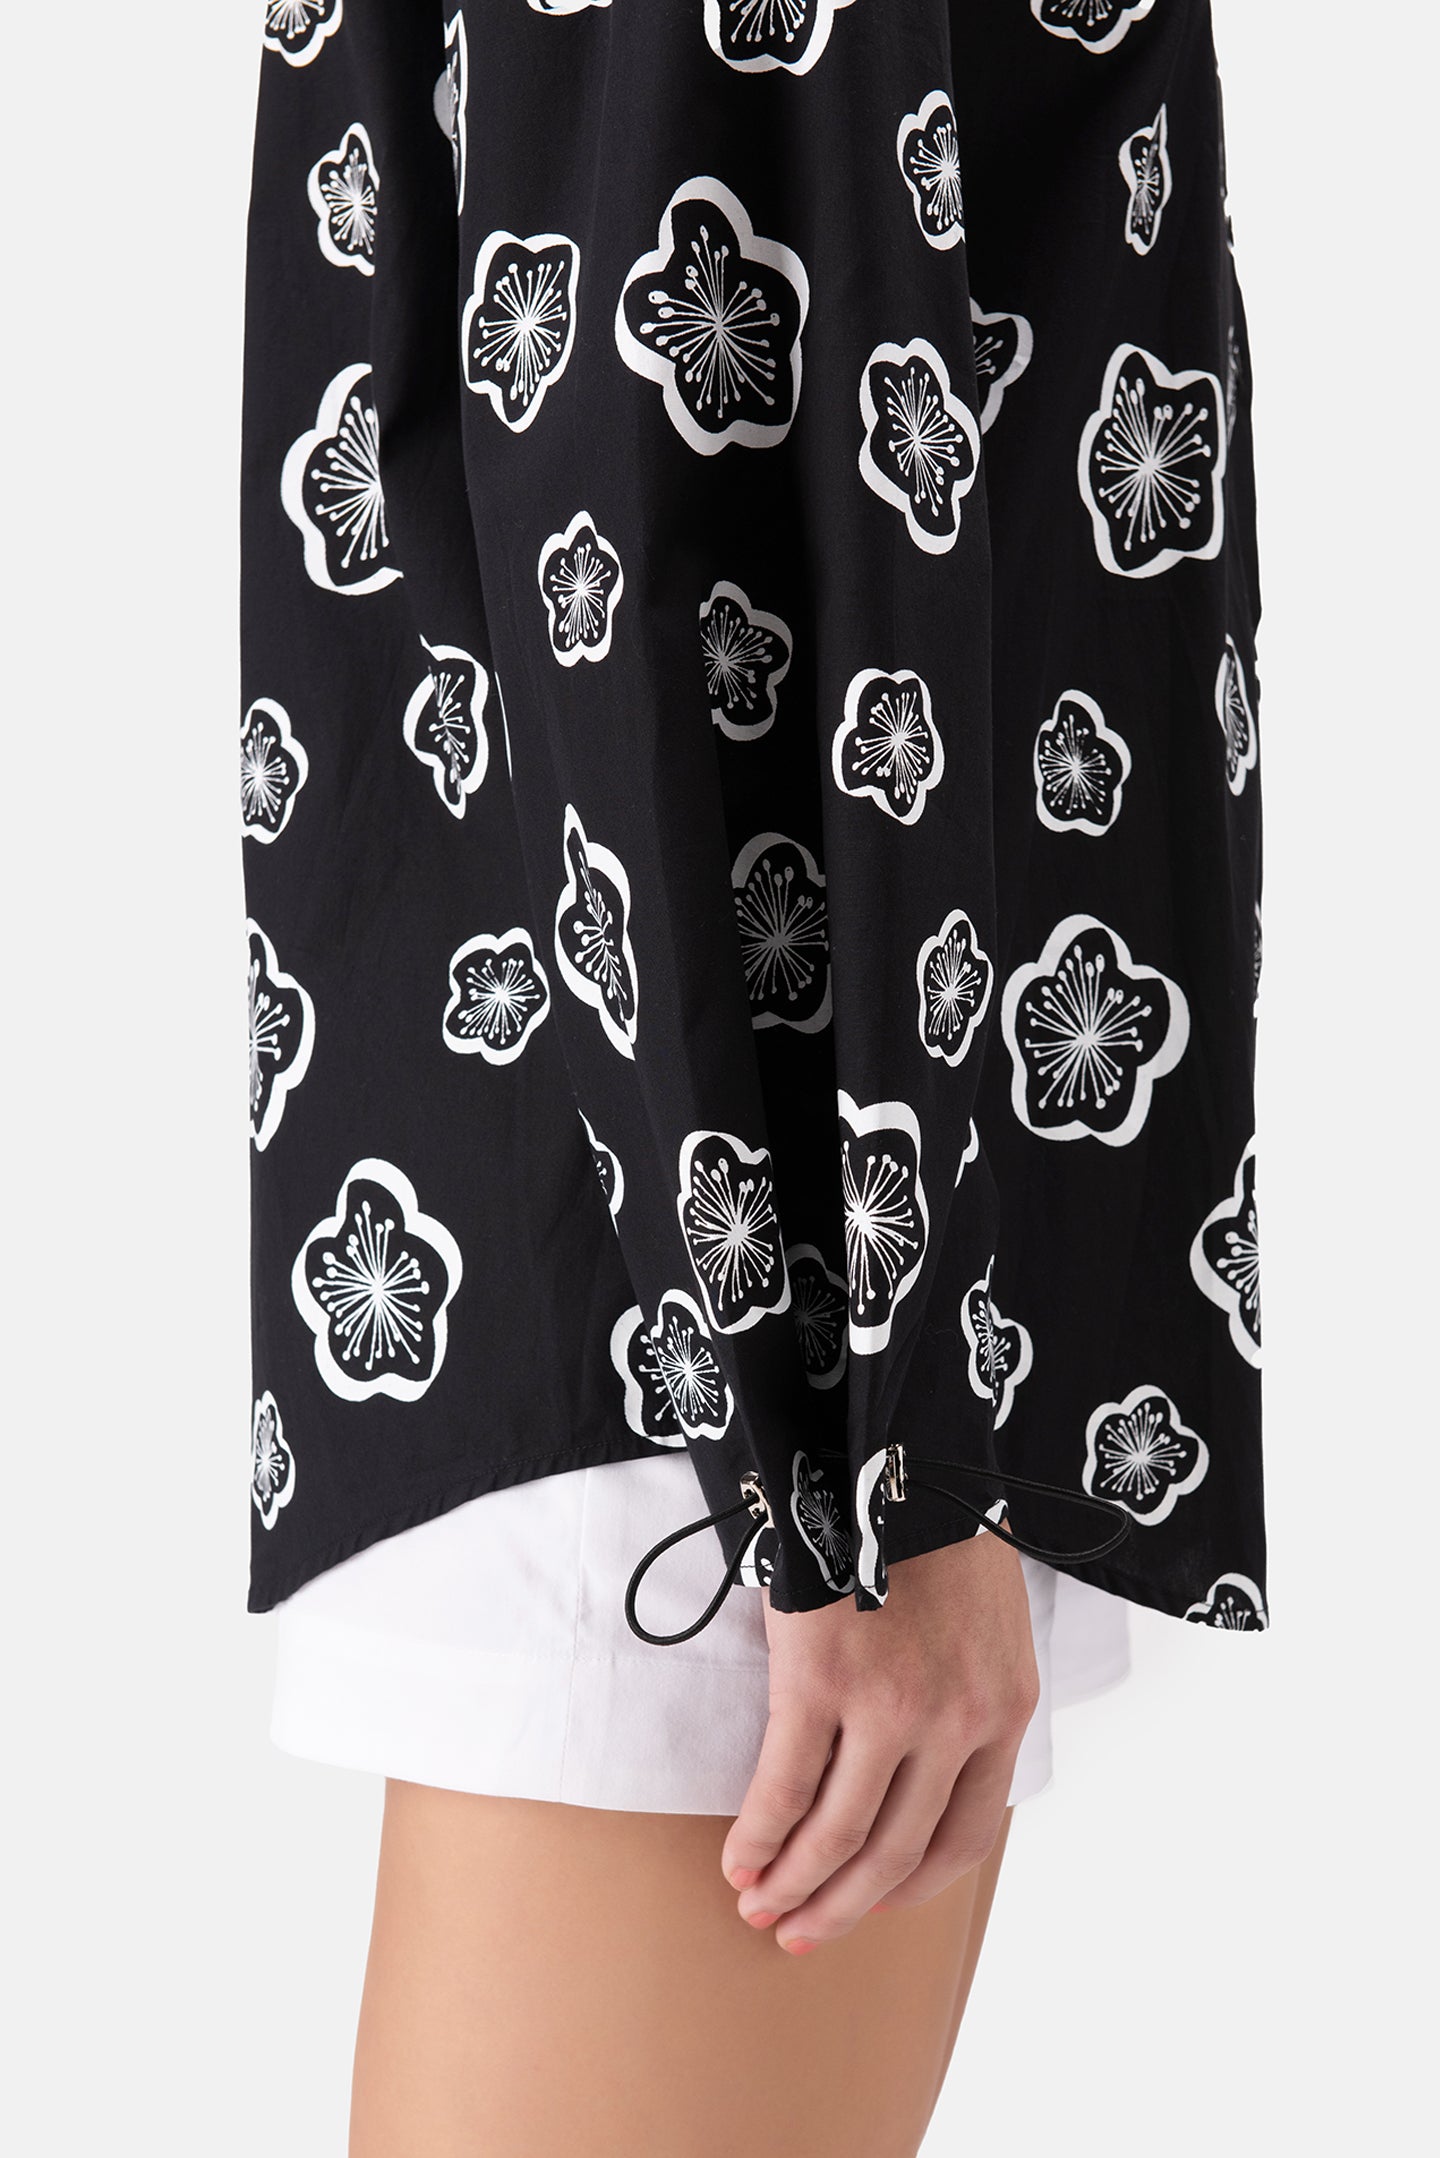 Printed Womens Shirt With Adjustable Drawstrings